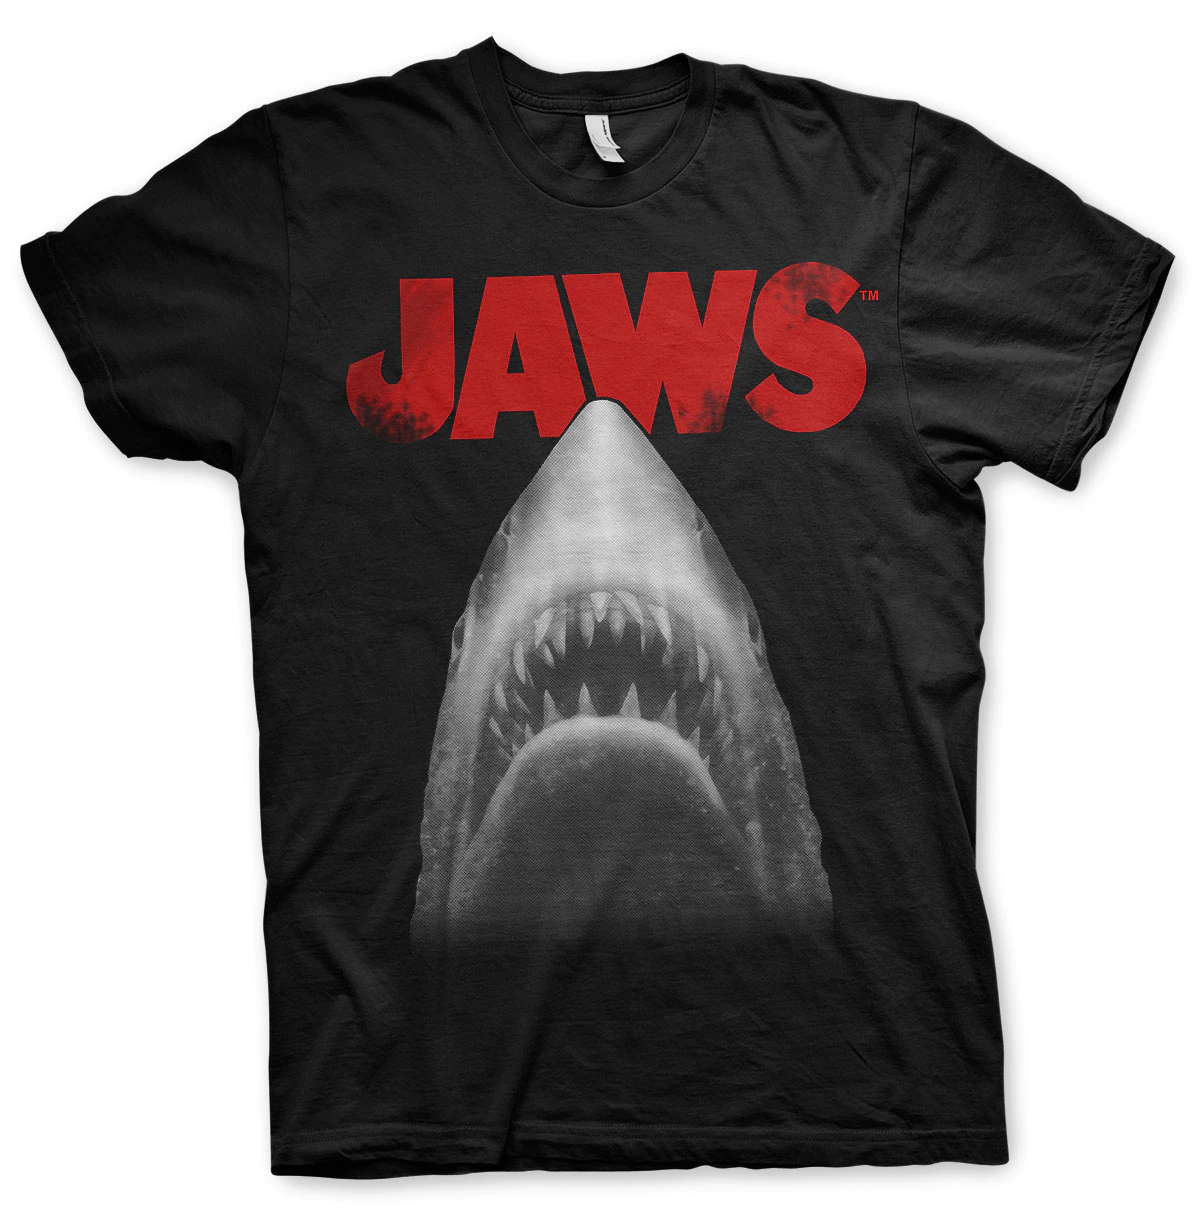 Jaws poster - t-shirt - black